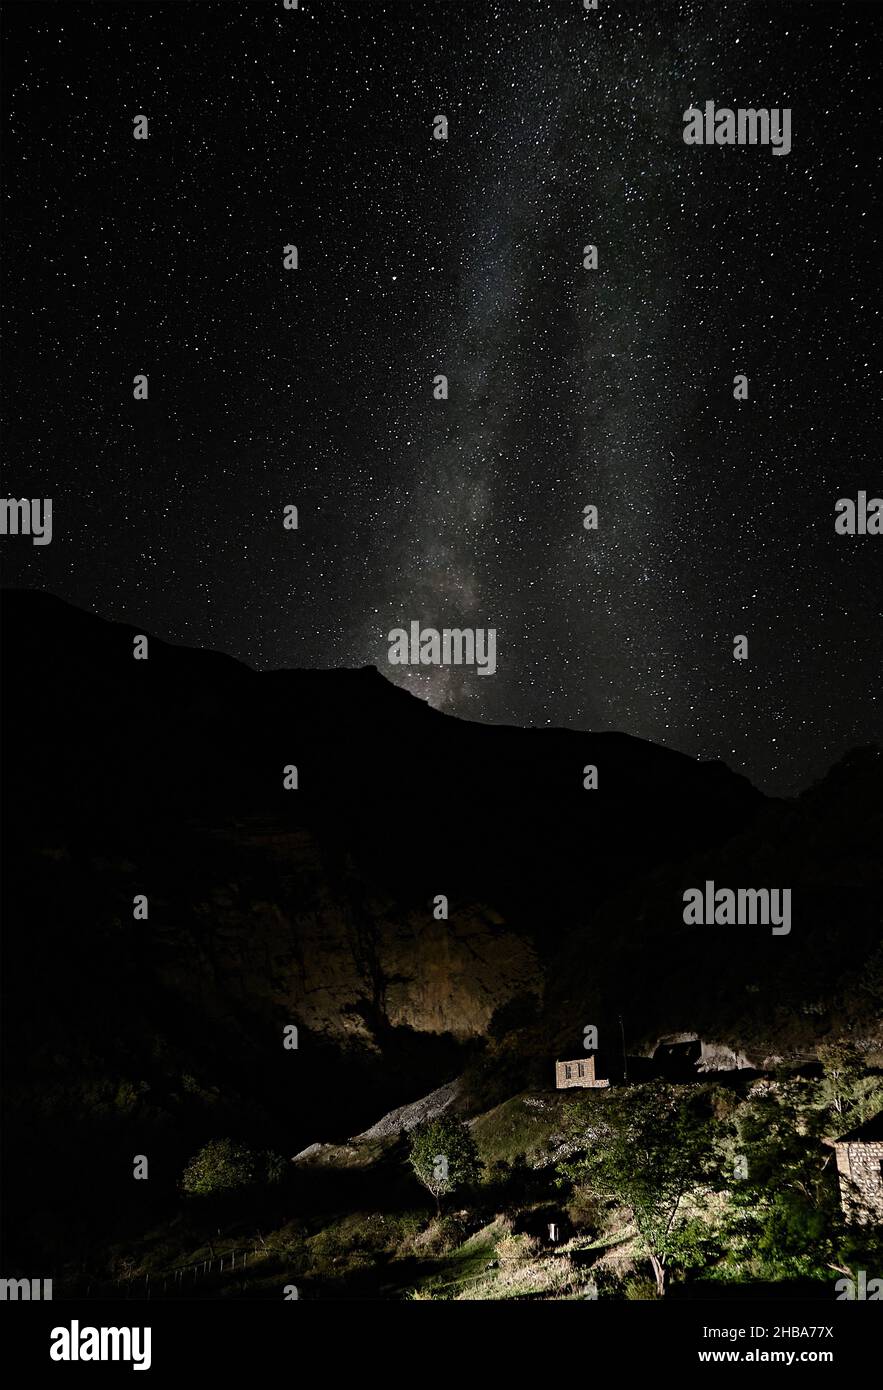 Dadivank Village at night, under deep dark night and Milky Way silhouette. Stock Photo